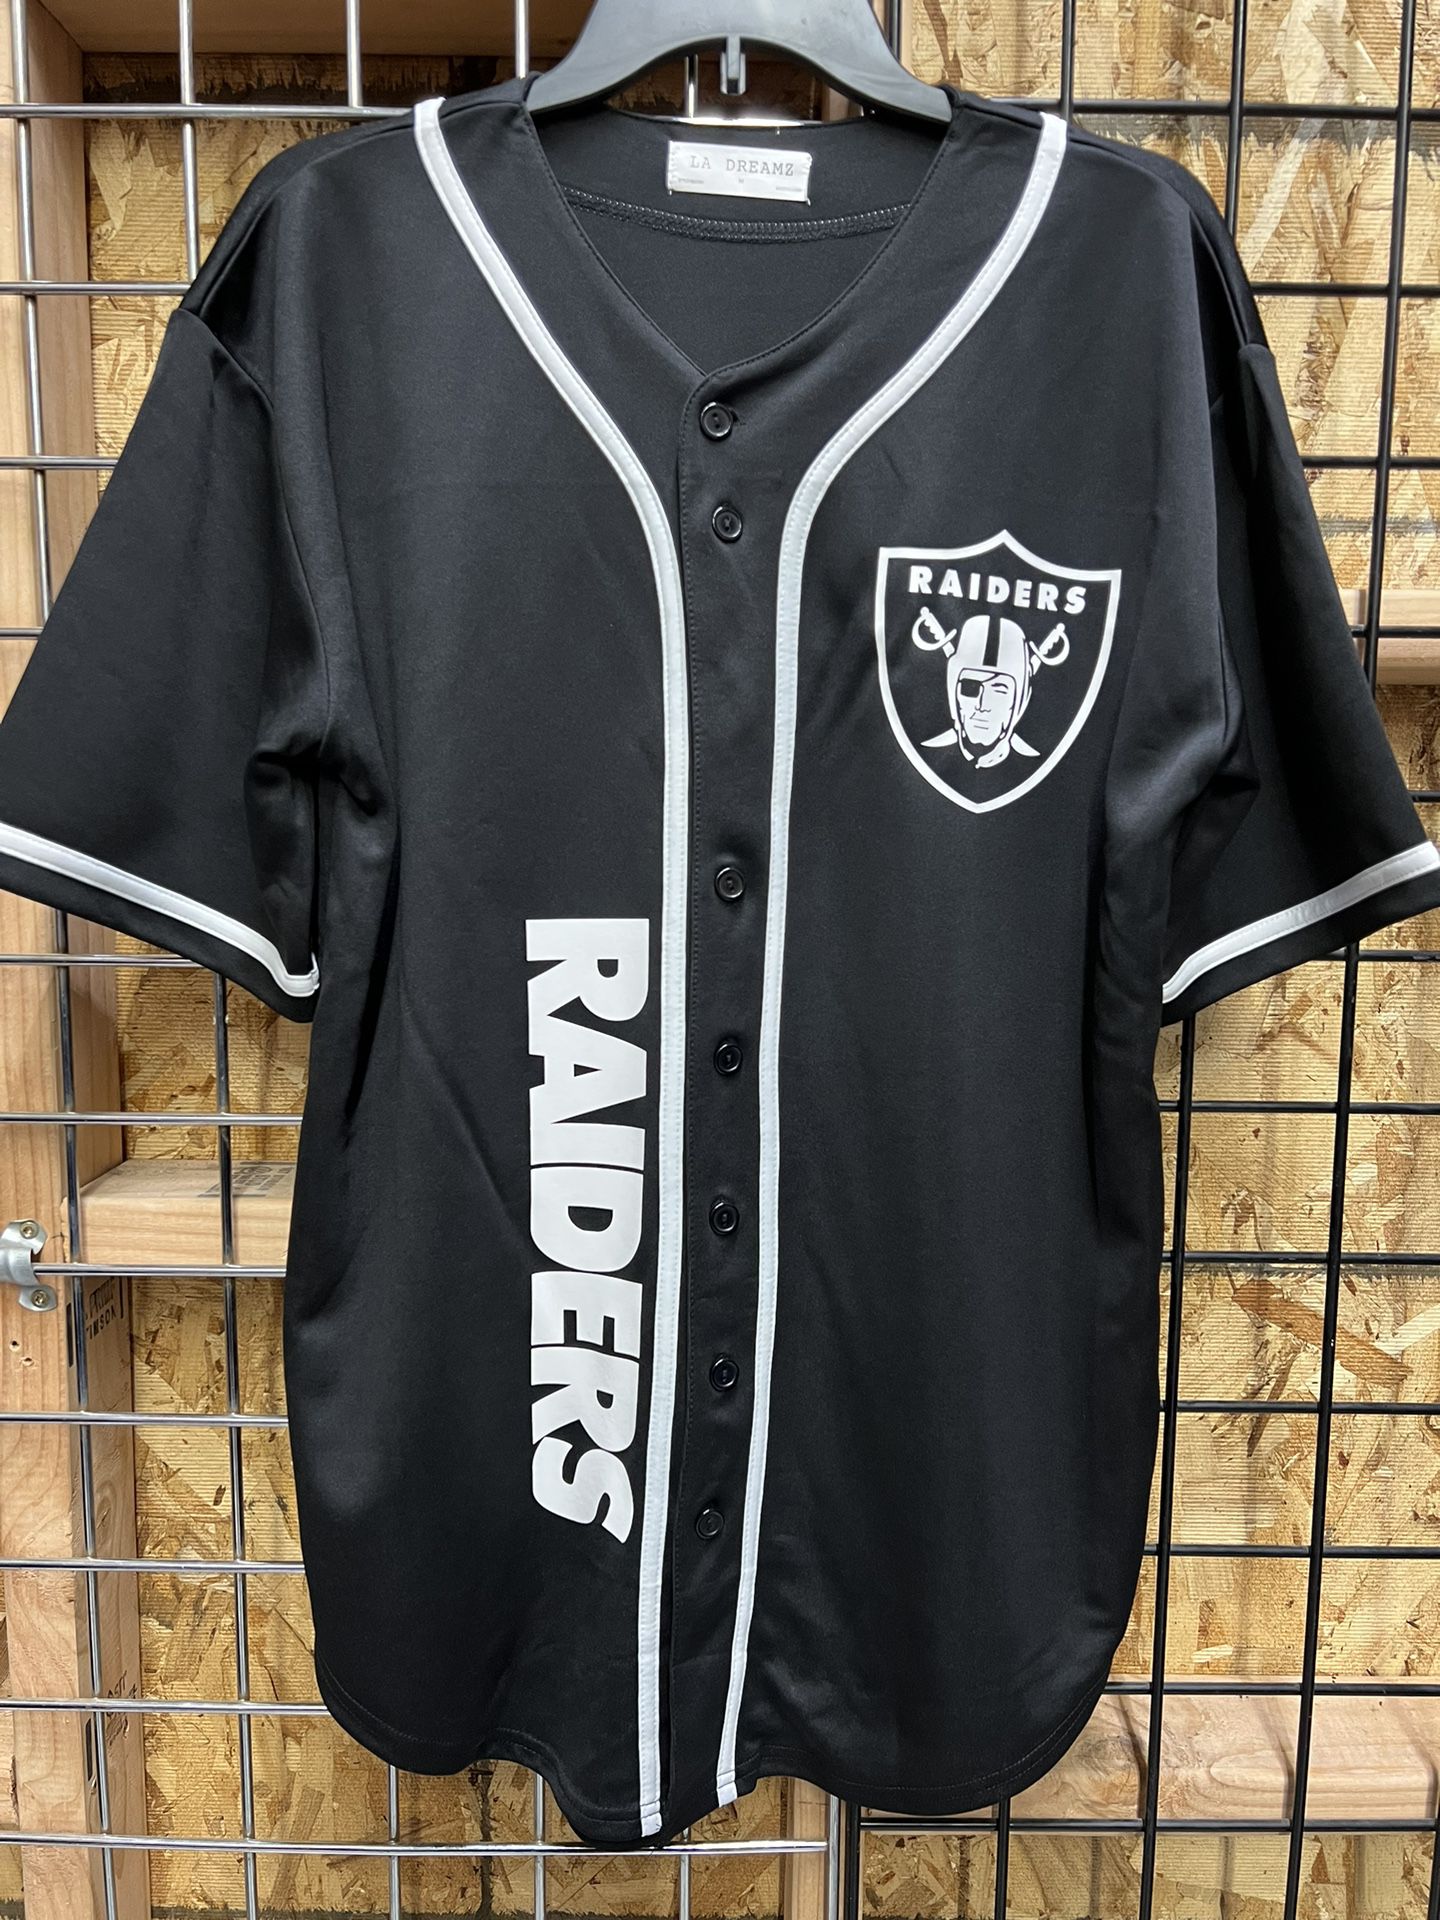 Raiders Baseball Jerseys 